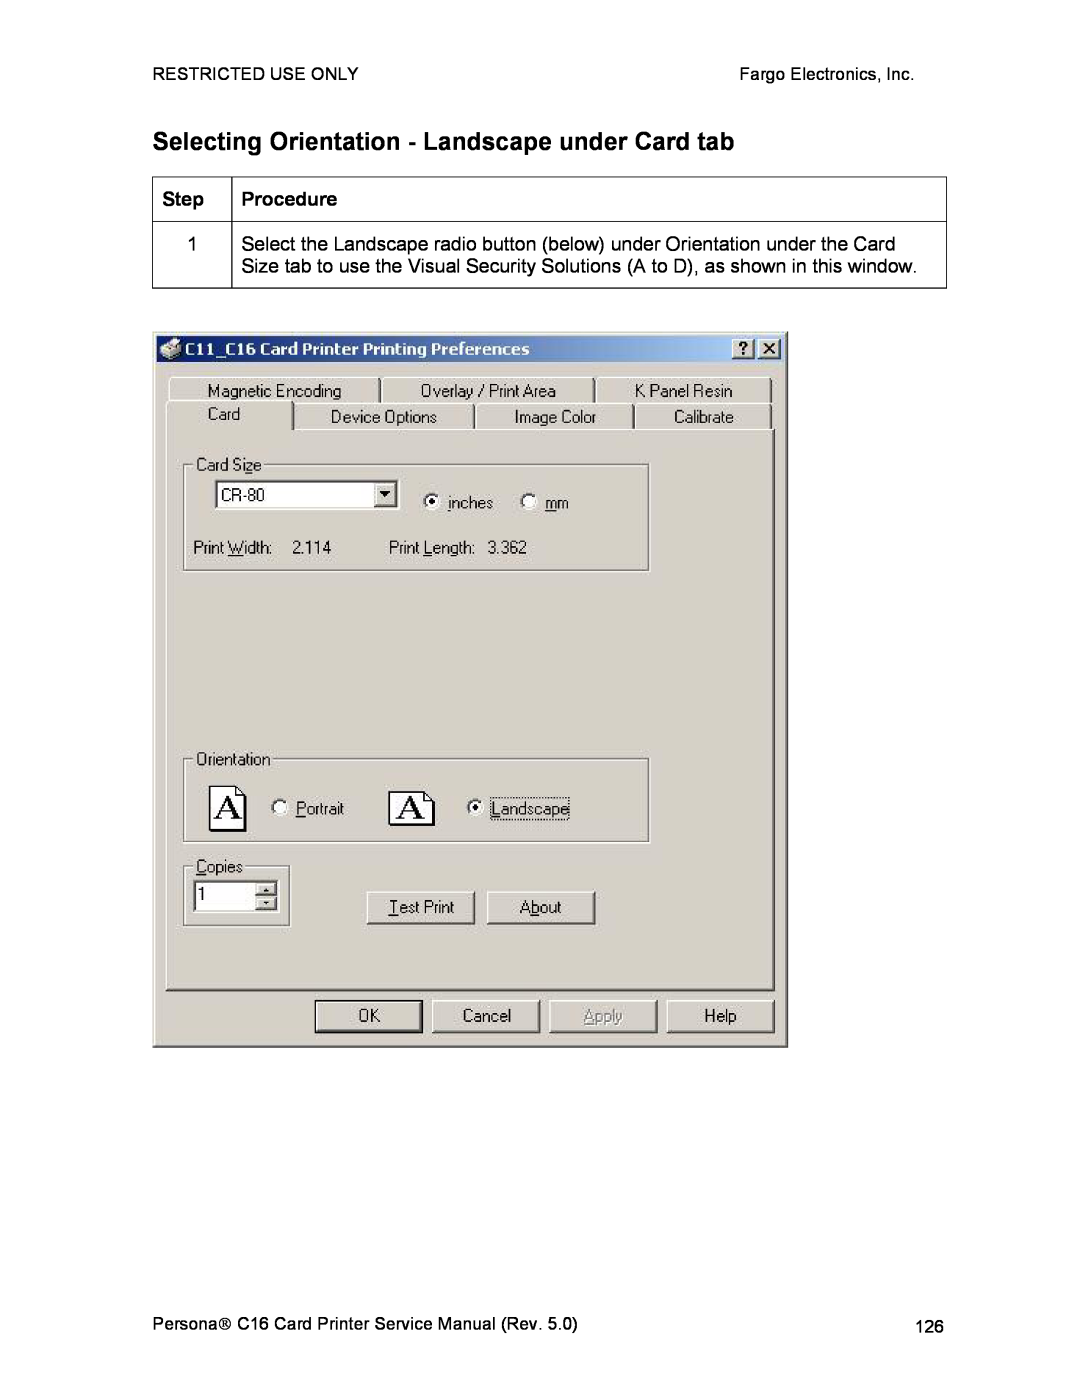 FARGO electronic C16 service manual Selecting Orientation - Landscape under Card tab, Procedure 